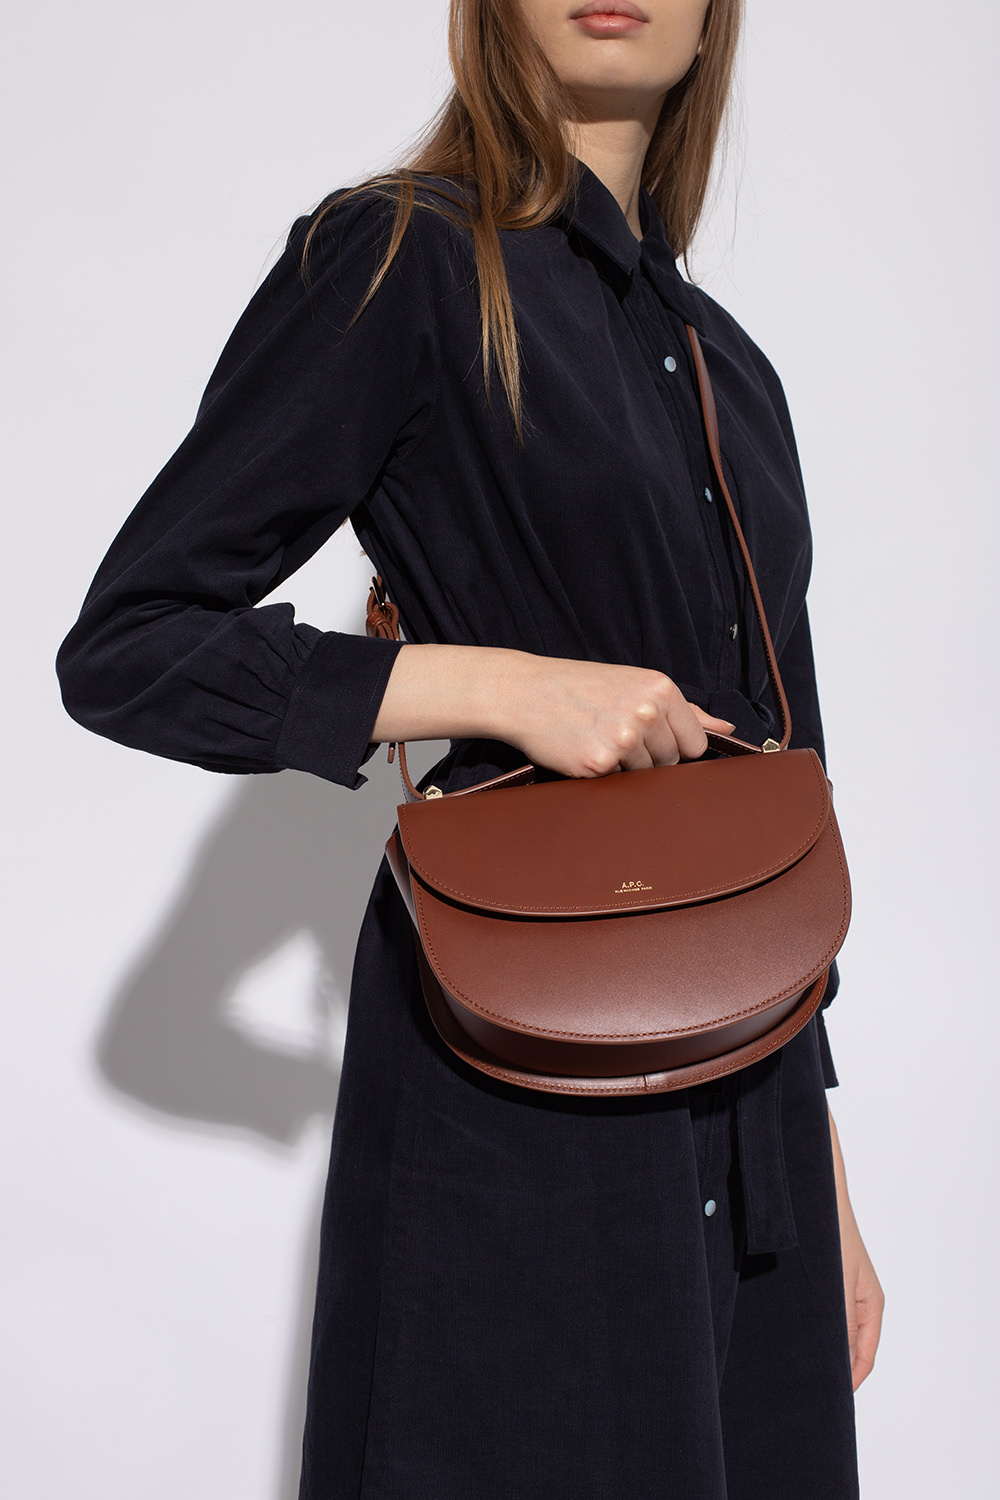 Geneve Leather Shoulder Bag in Brown - A P C